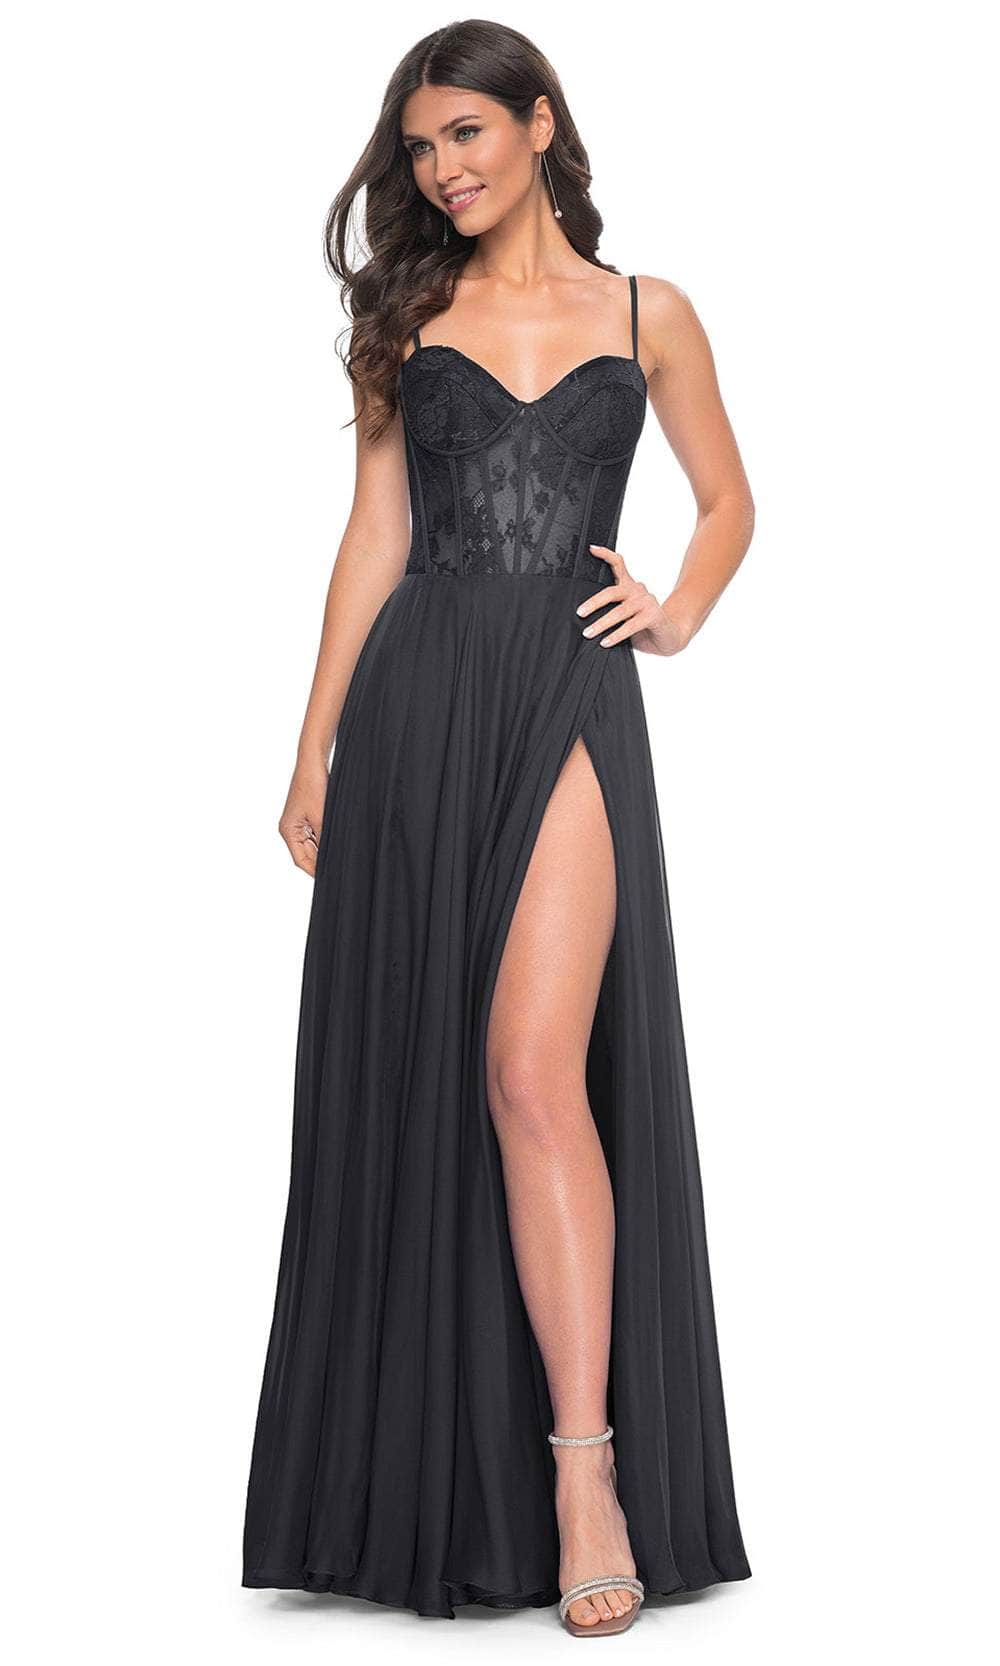 Image of La Femme 32276 - Lace Bustier Prom Dress